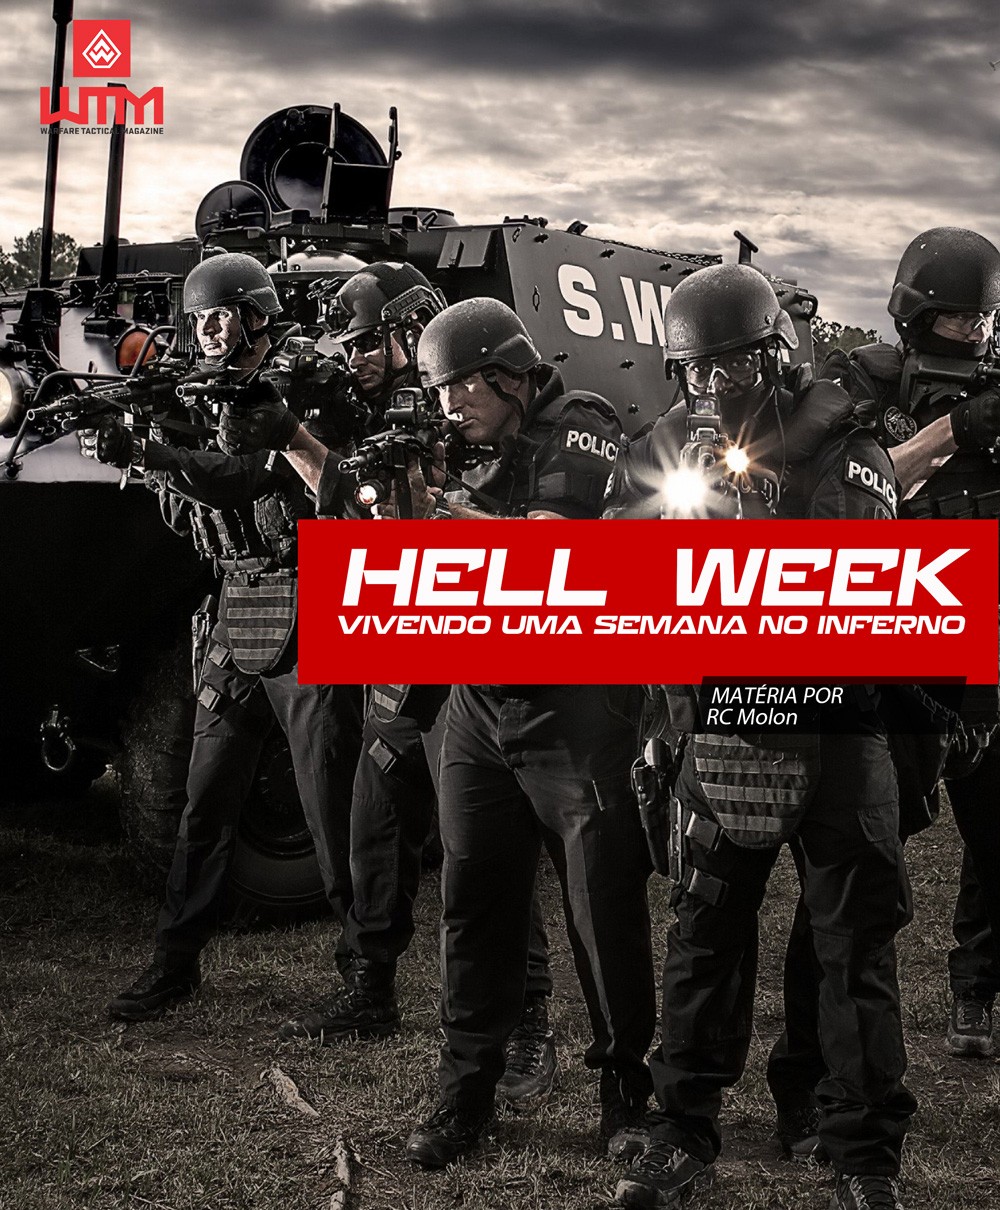 Hell Week, semana do inferno, no inferno, infernal.